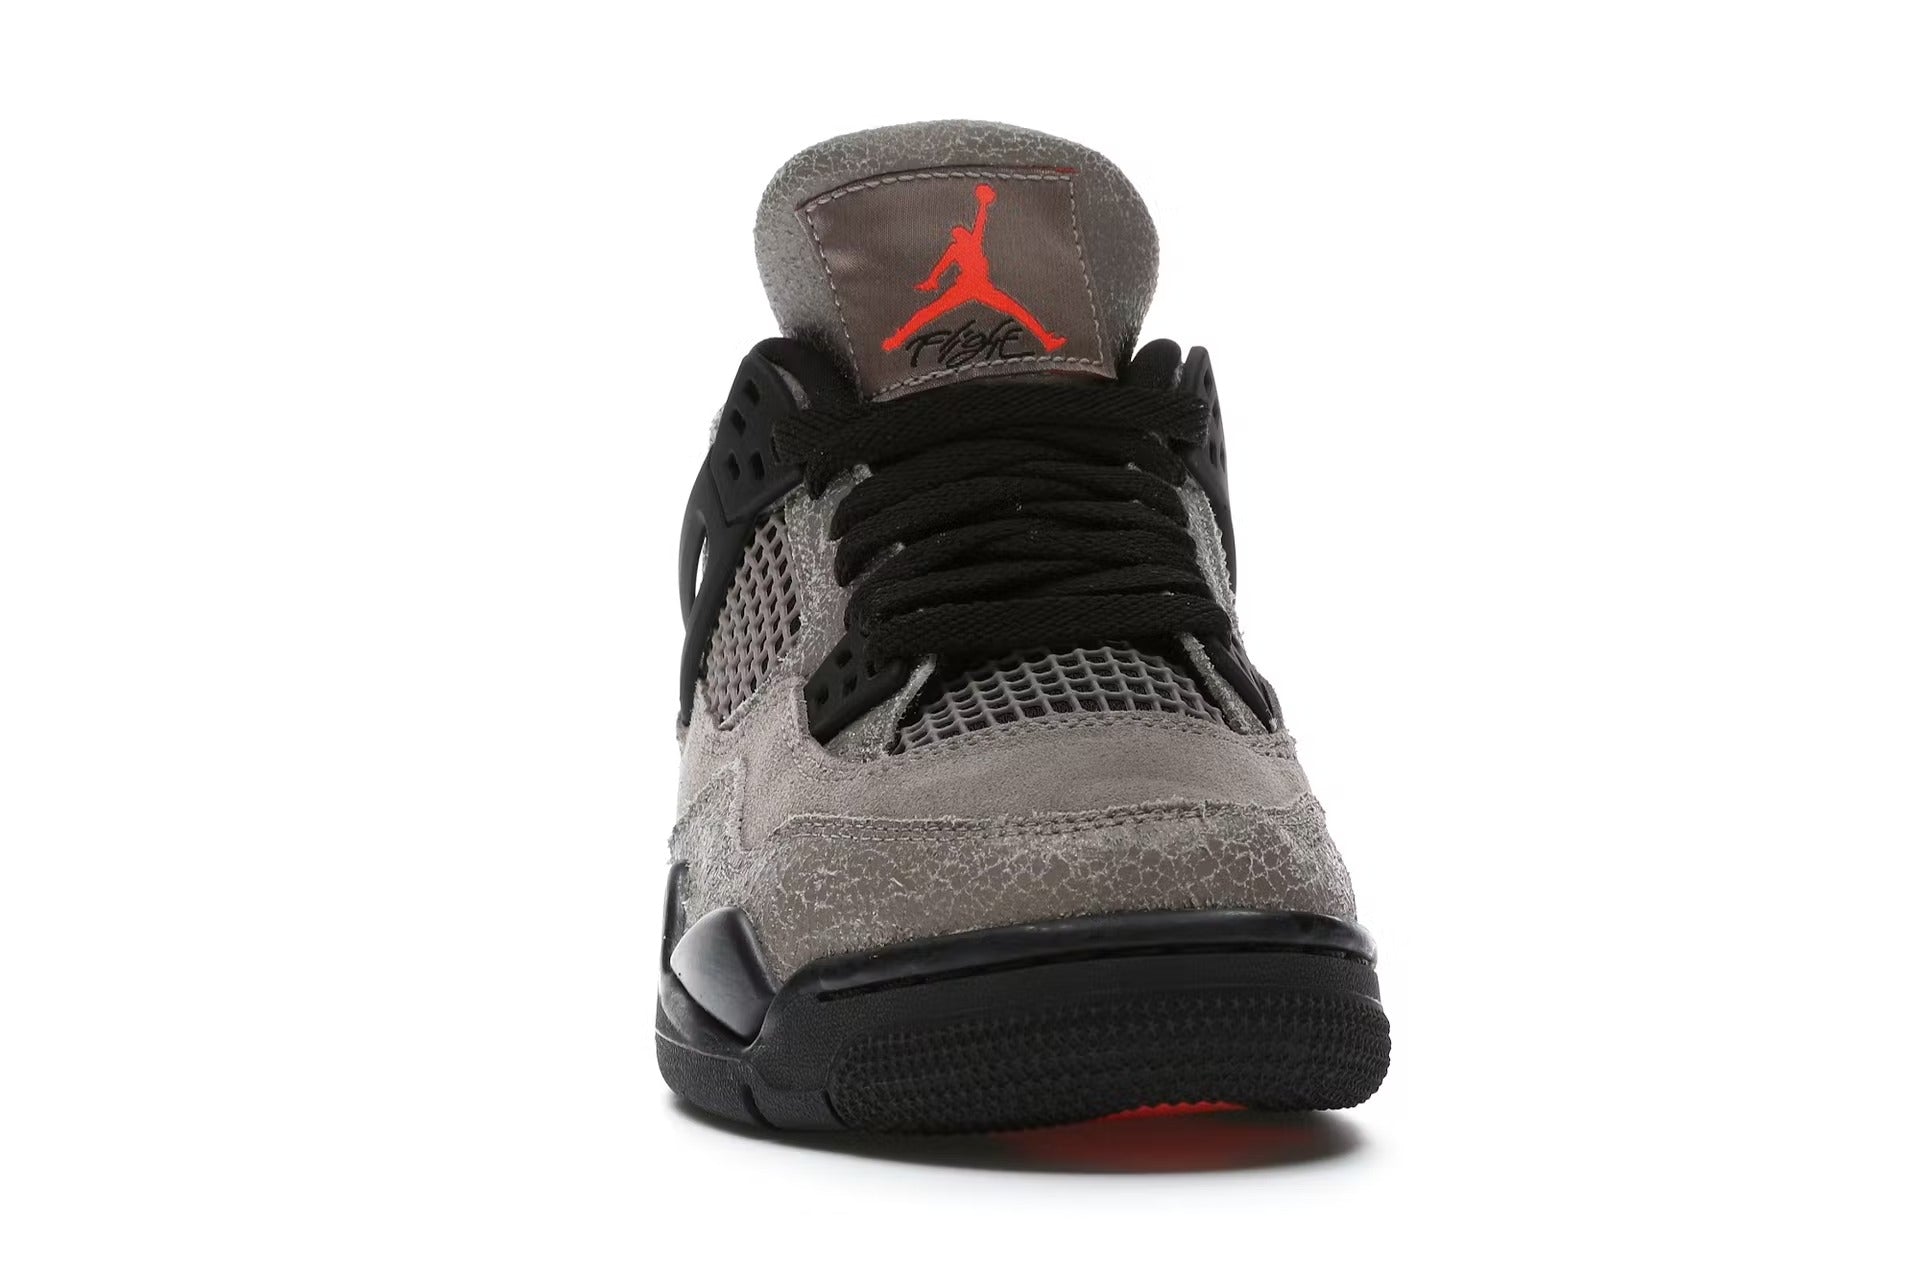 Nike Air Jordan 4 Taupe Haze: Photos & Where to Buy This Week